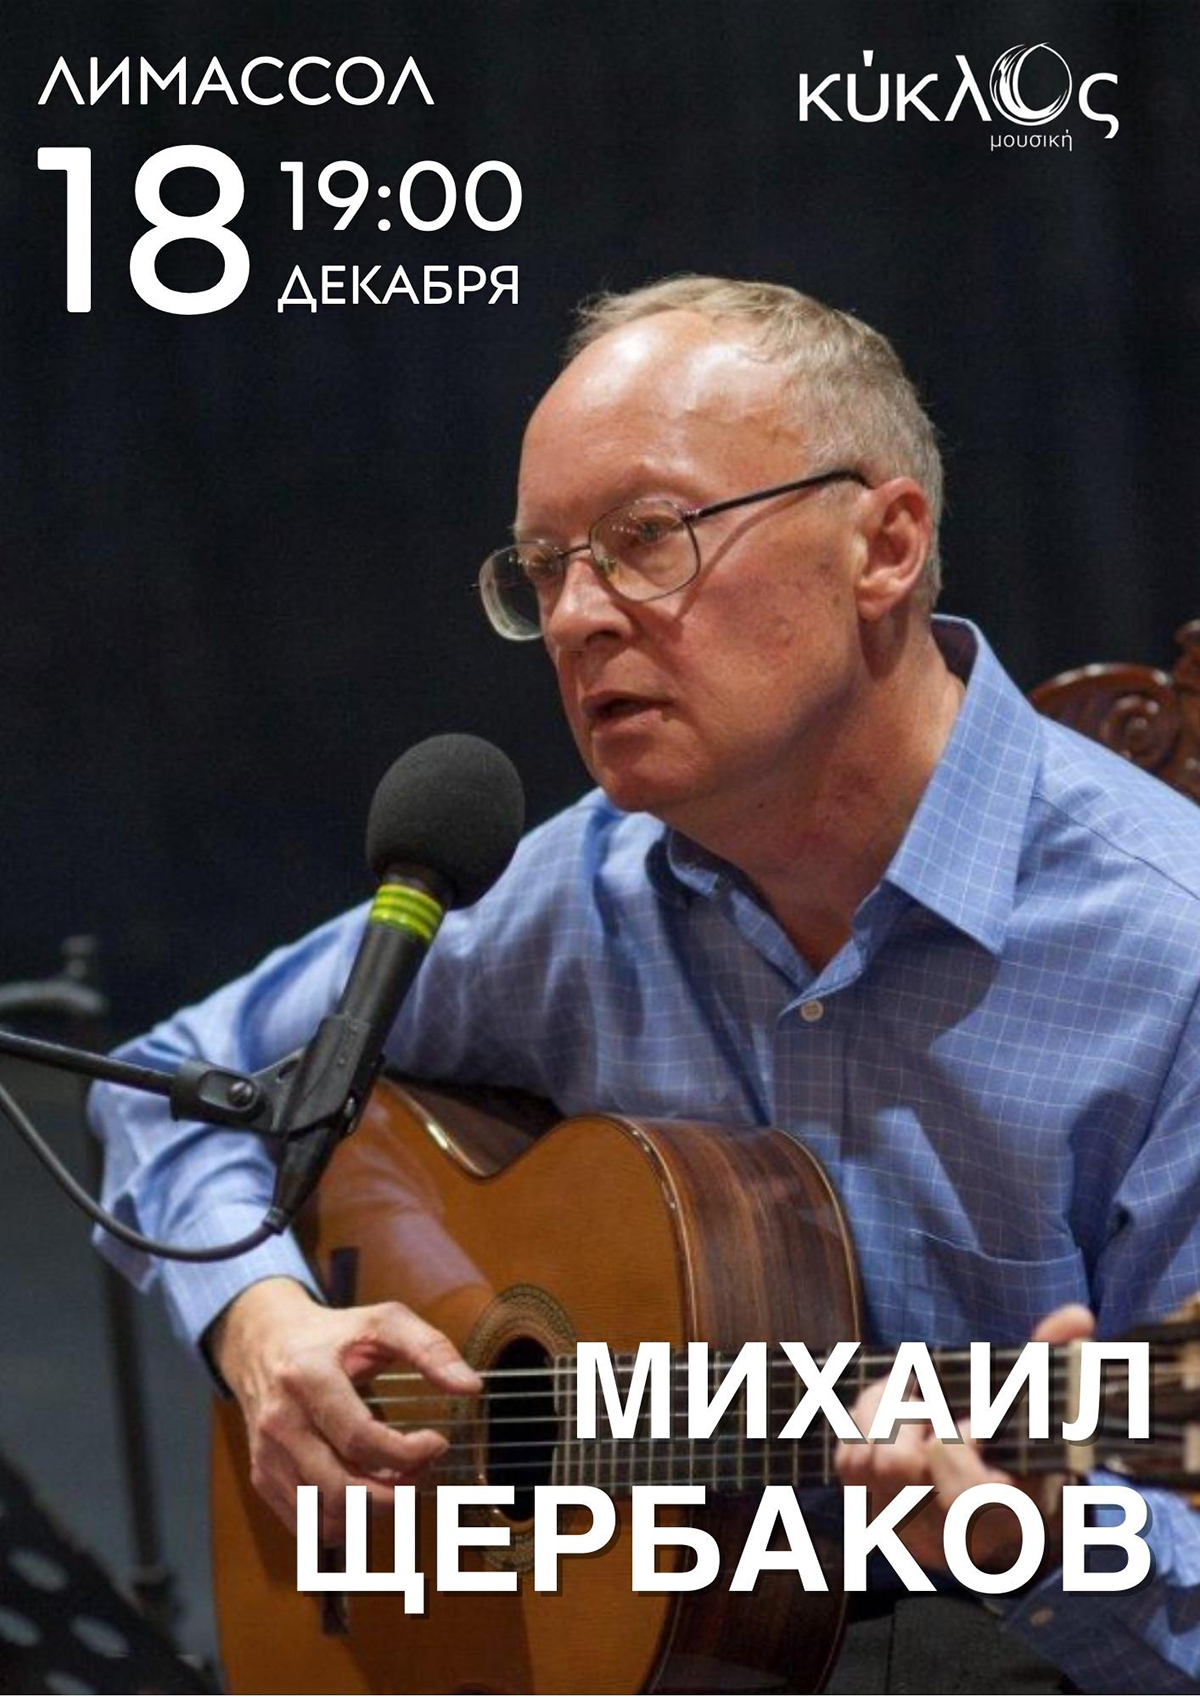 MIKHAIL SHCHERBAKOV